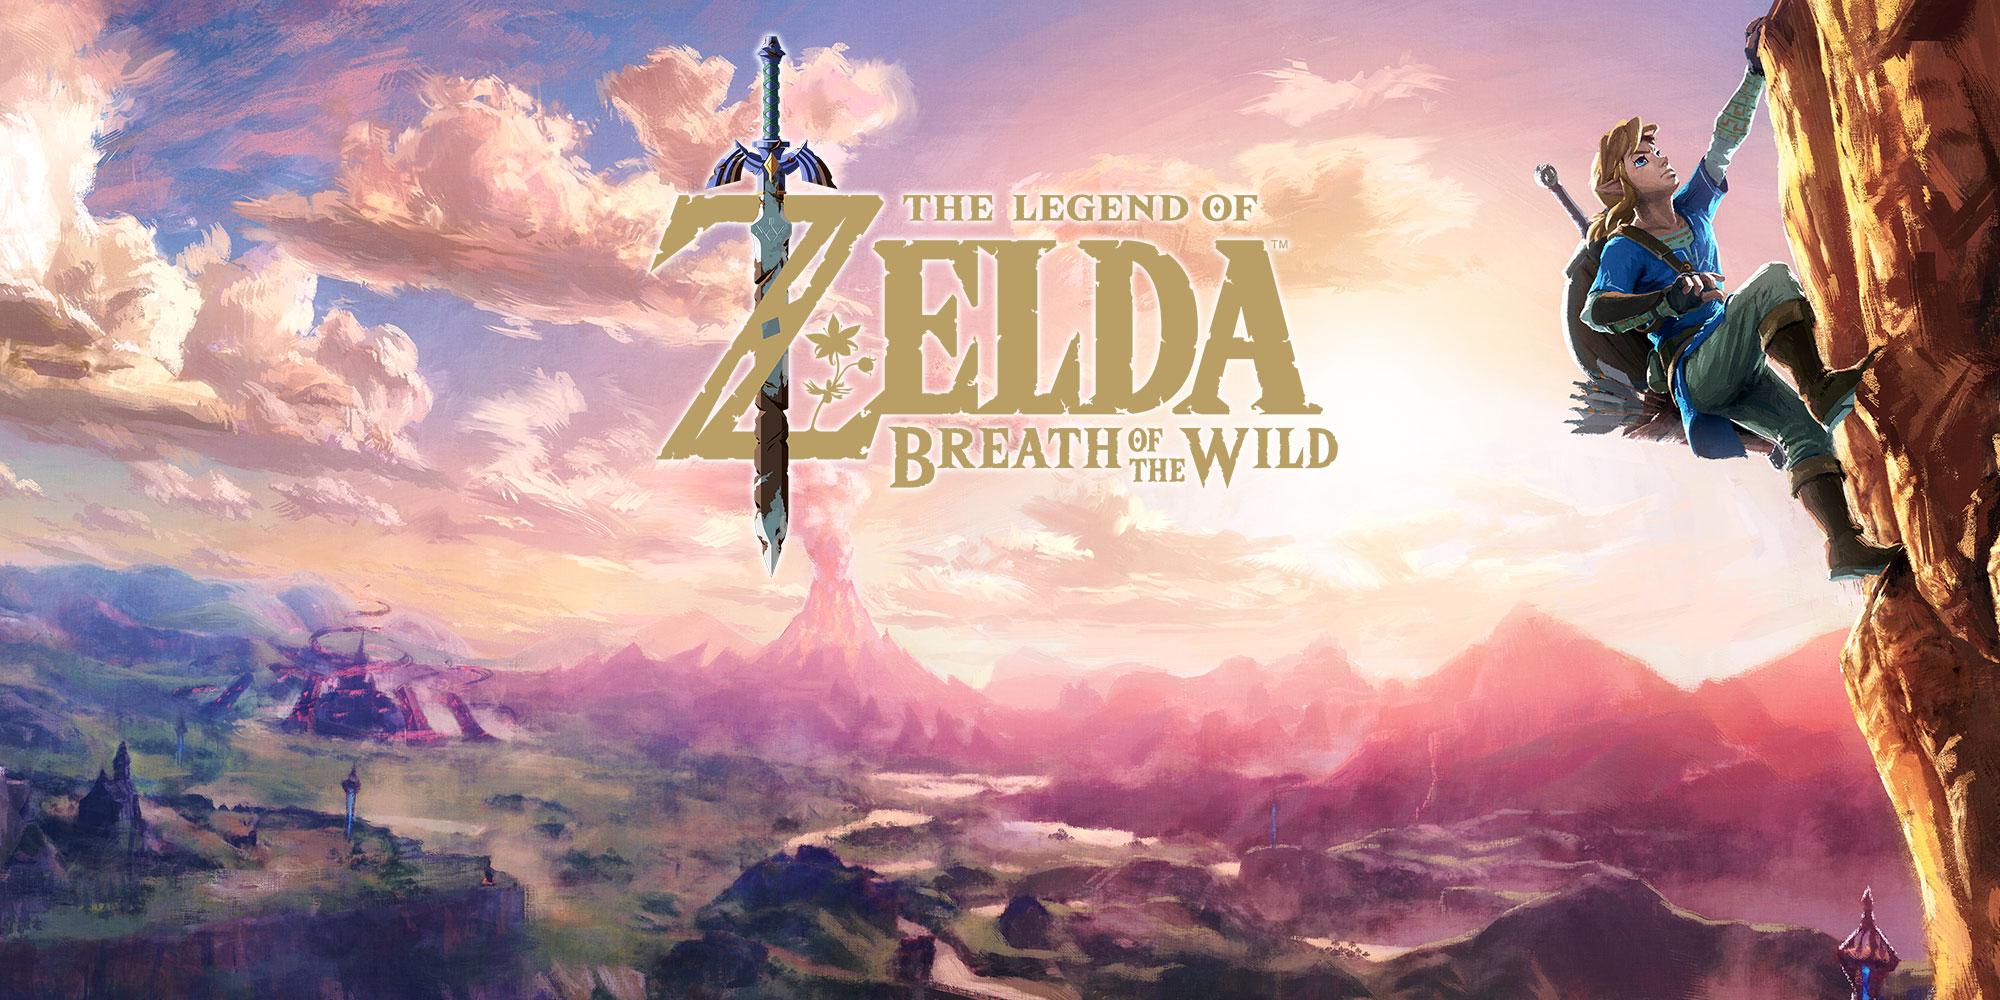 The Legend of Zelda Breath of the Wild, Cemu Emulator, Part 2